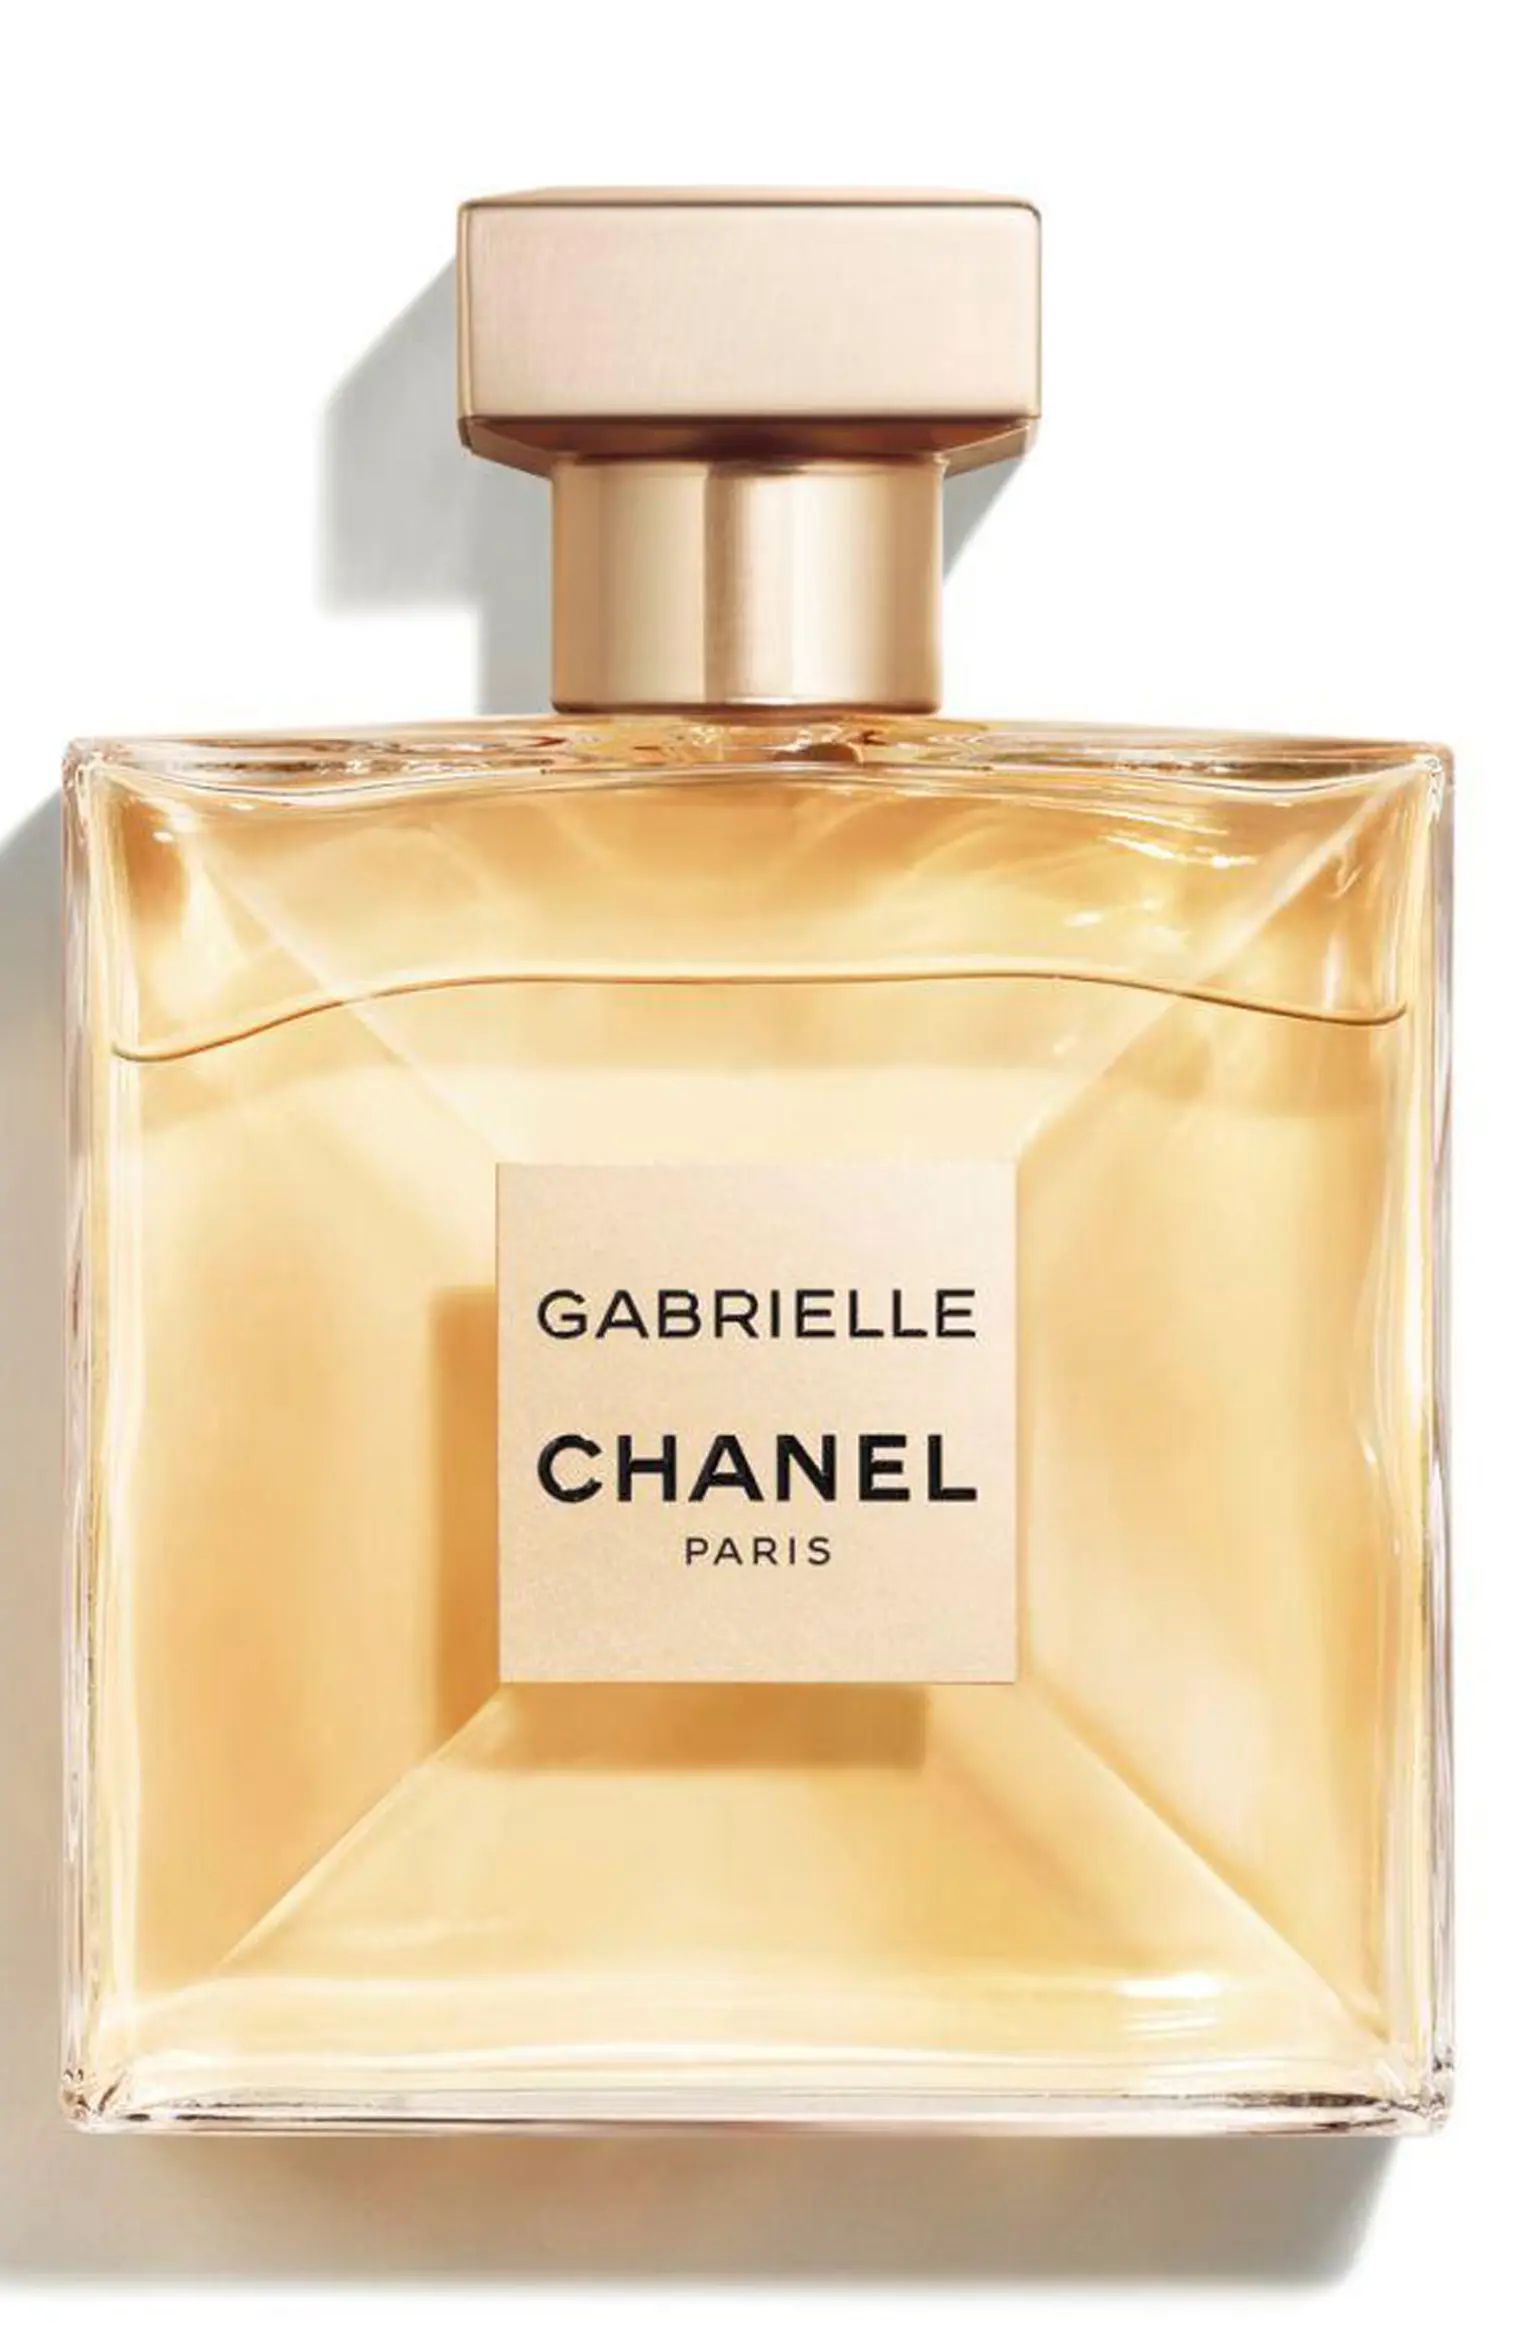 GABRIELLE CHANEL Eau de Parfum Spray | Nordstrom